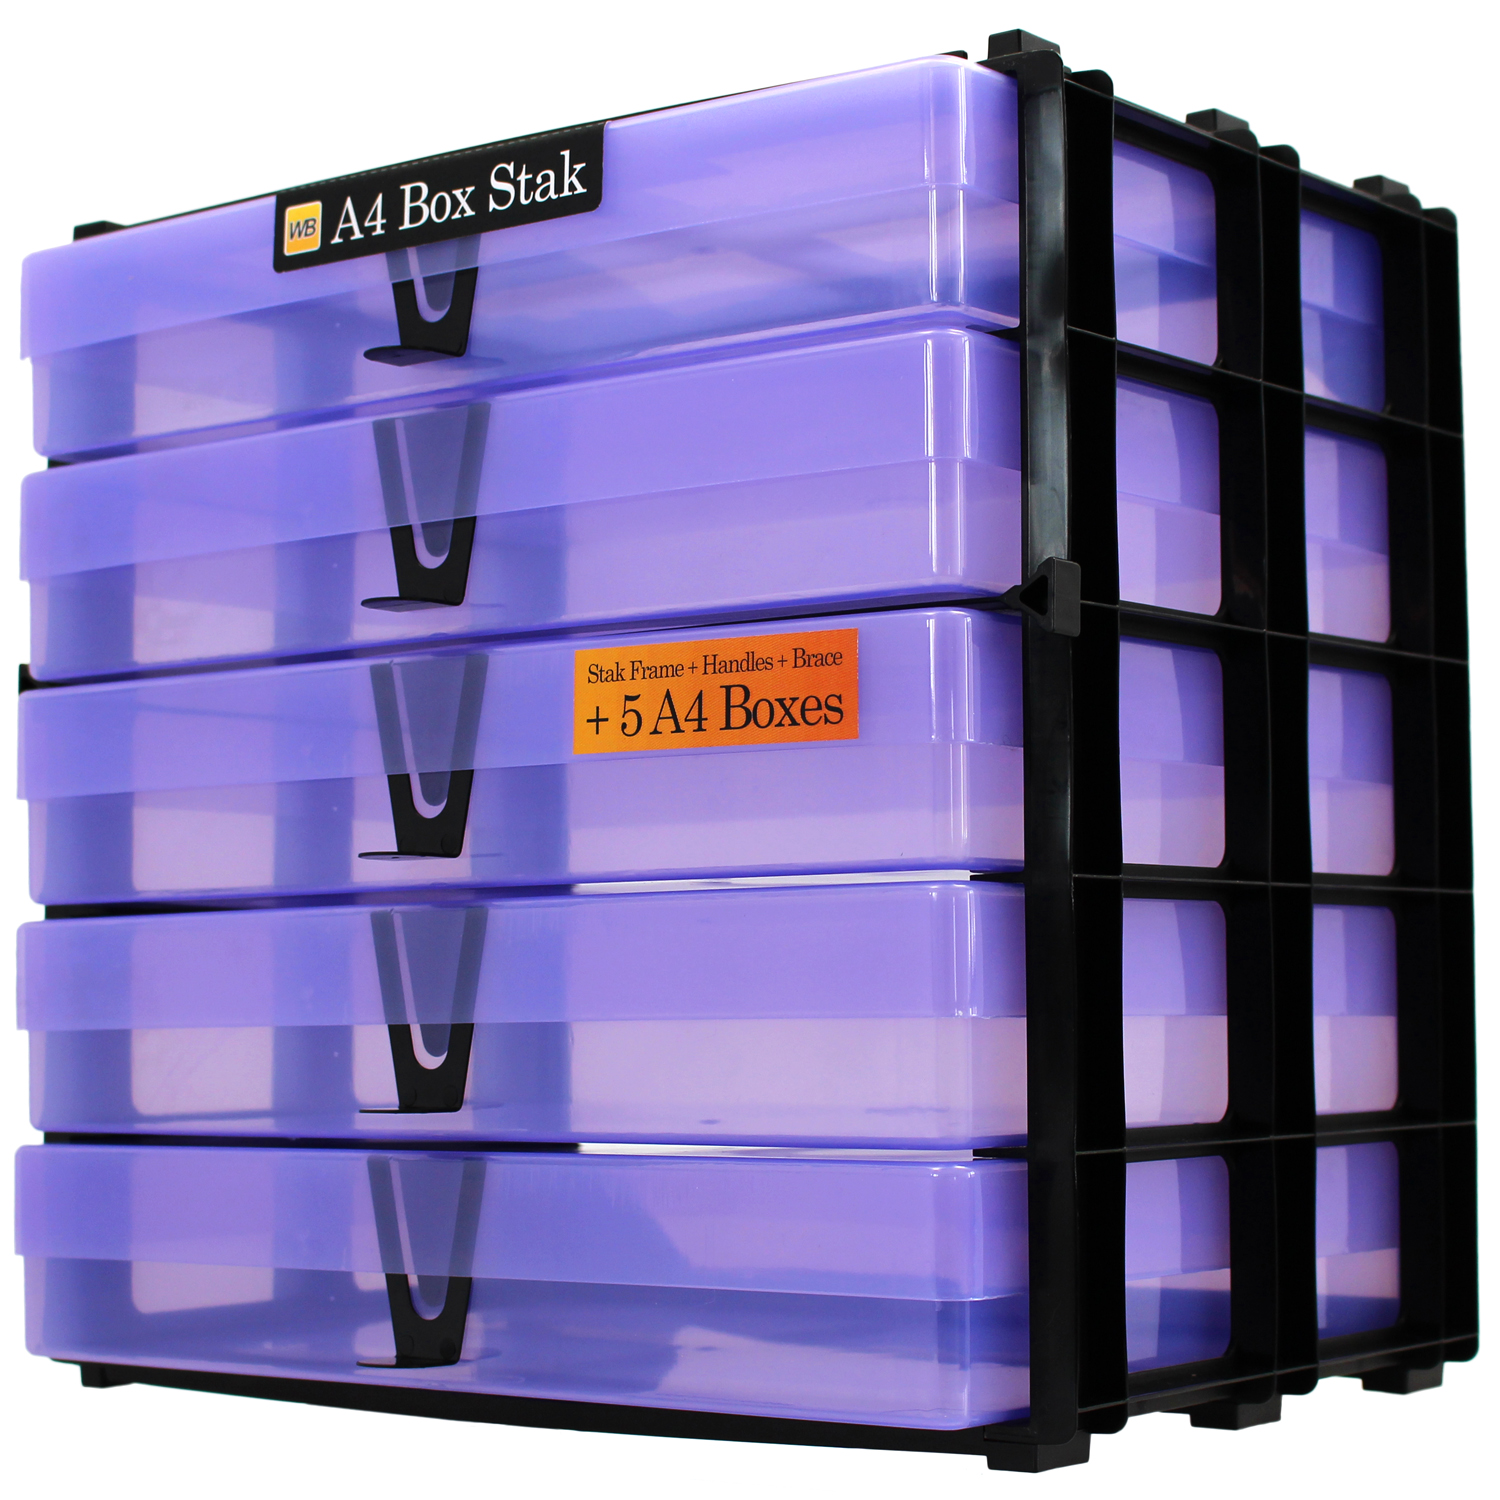 Suppliers Of A4 Box Stak Craft Storage Unit UK